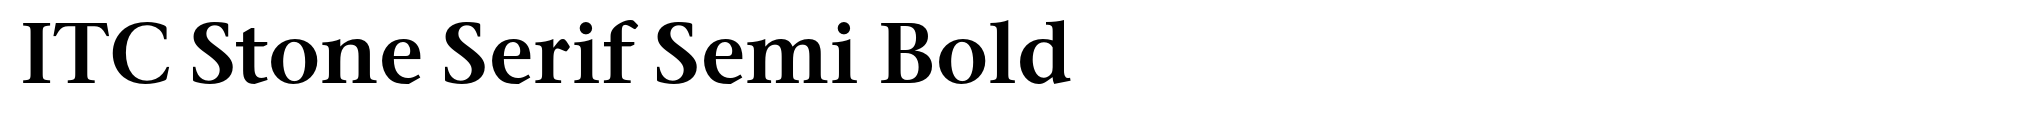 ITC Stone Serif Semi Bold image